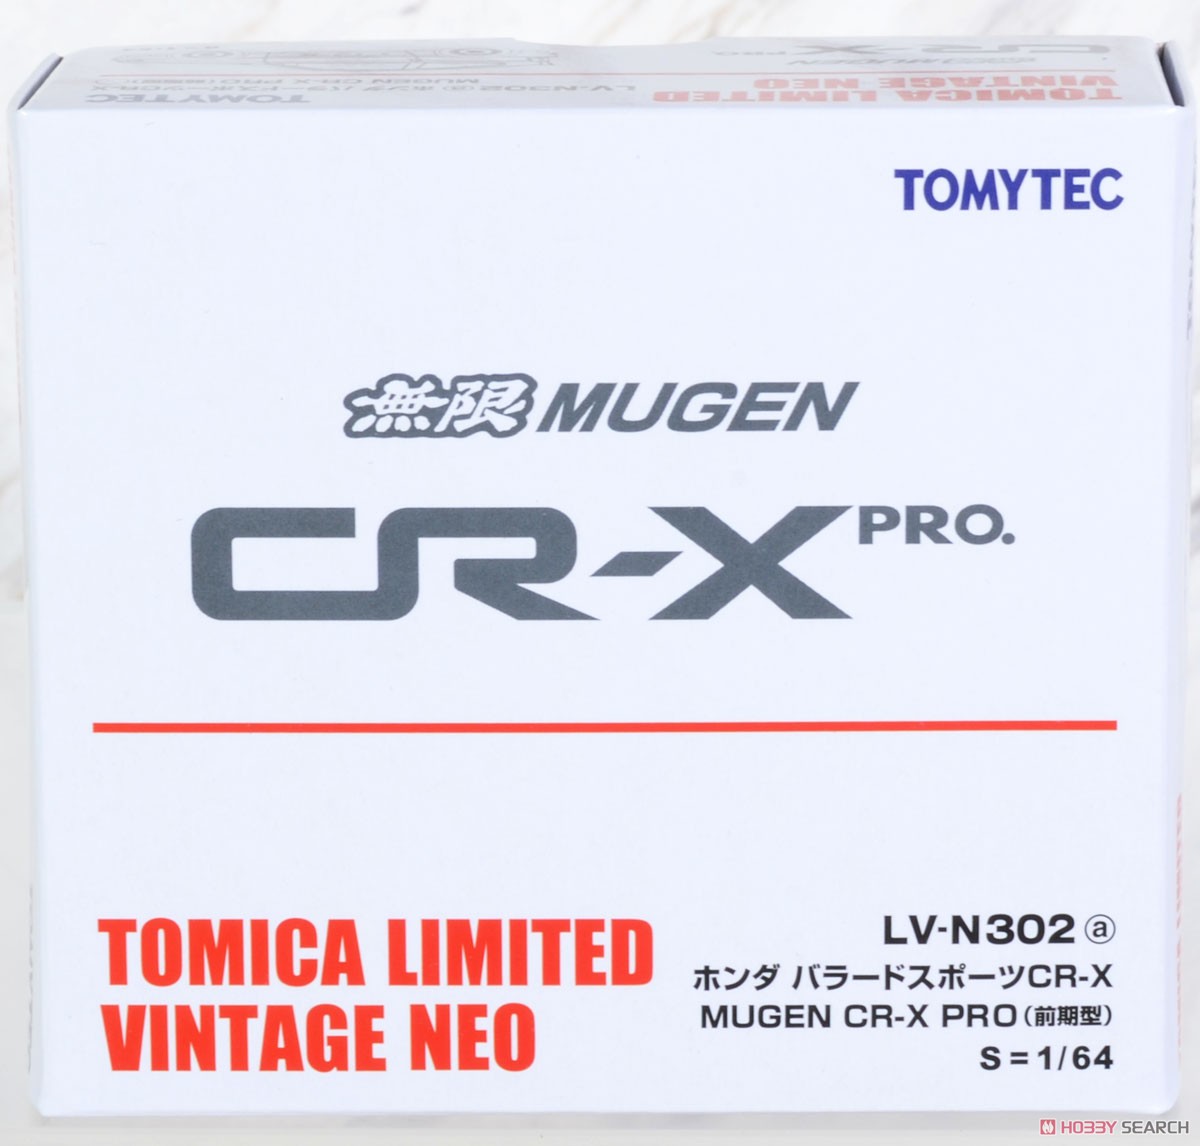 TLV-N302a Honda Ballade Sports CR-X Mugen CR-X Pro (White) Early Type (Diecast Car) Package1